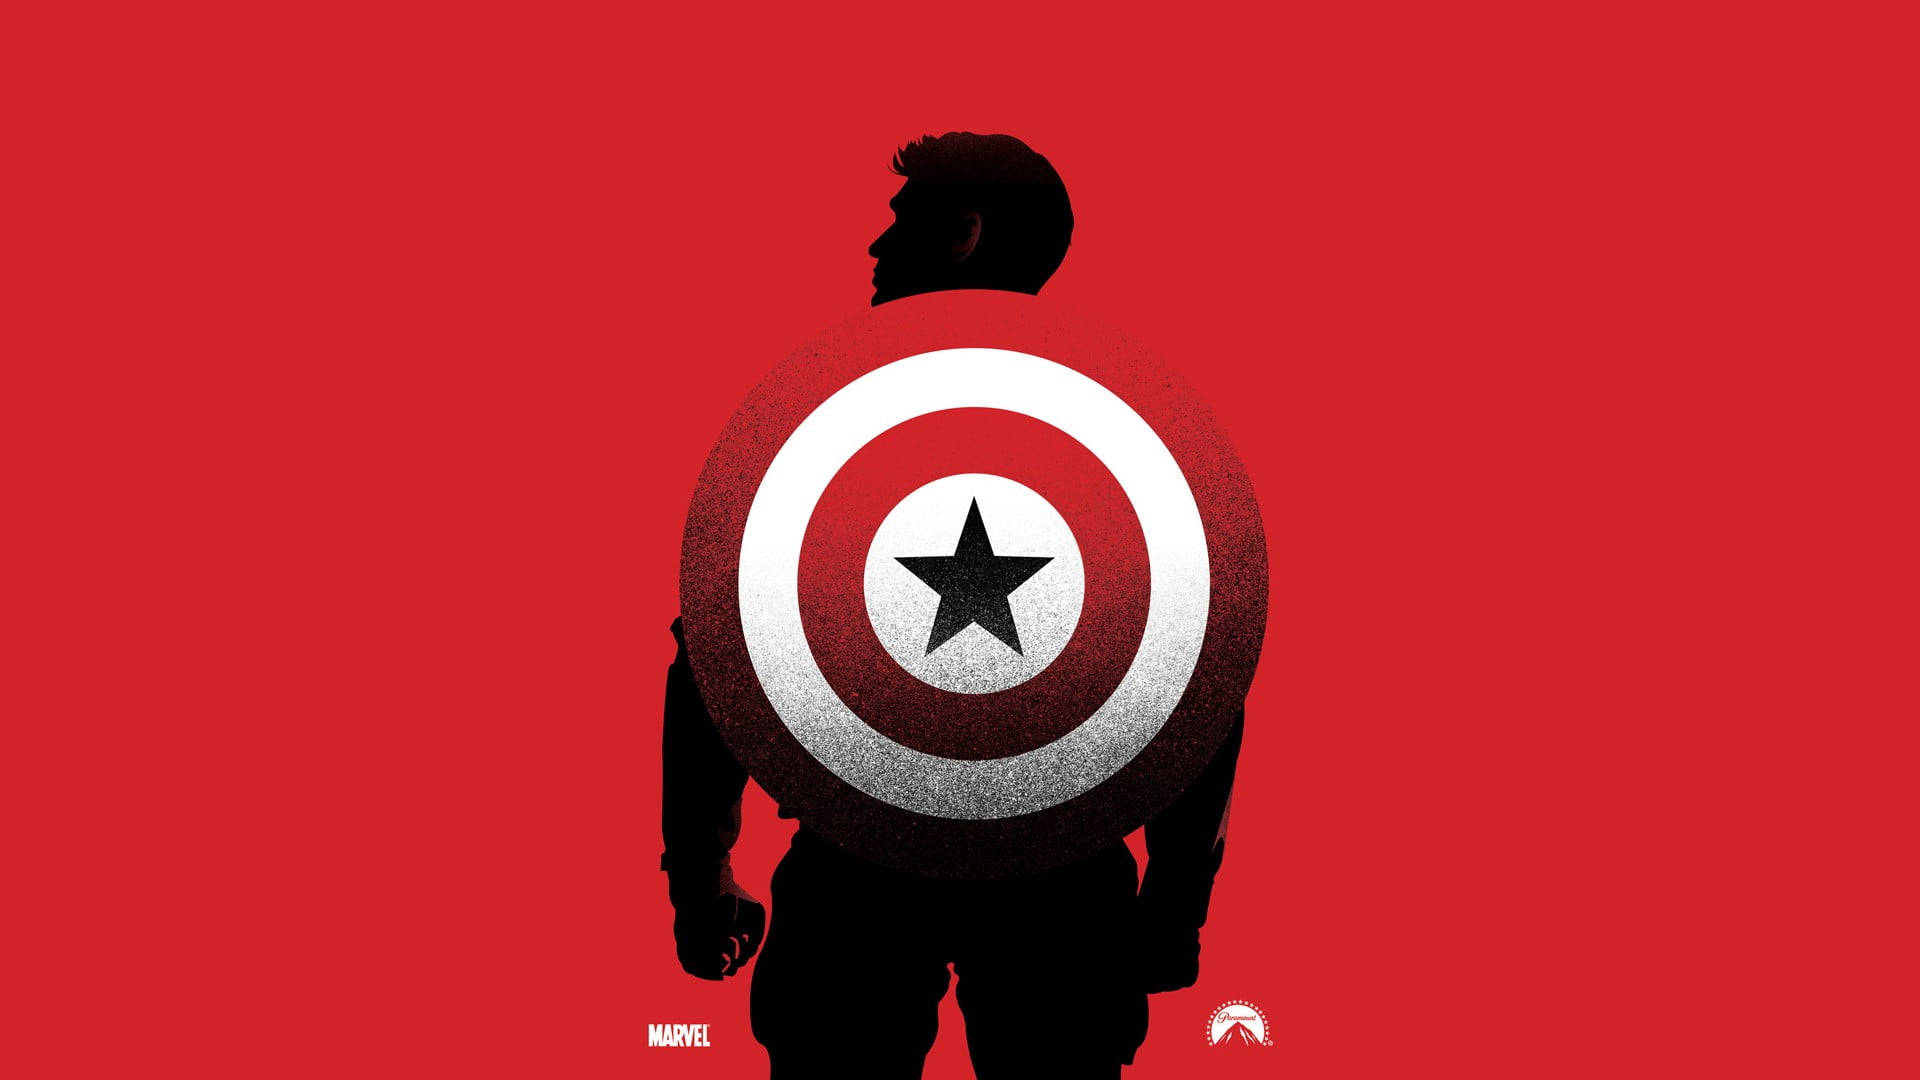 Hd Superhero Captain America Silhouette